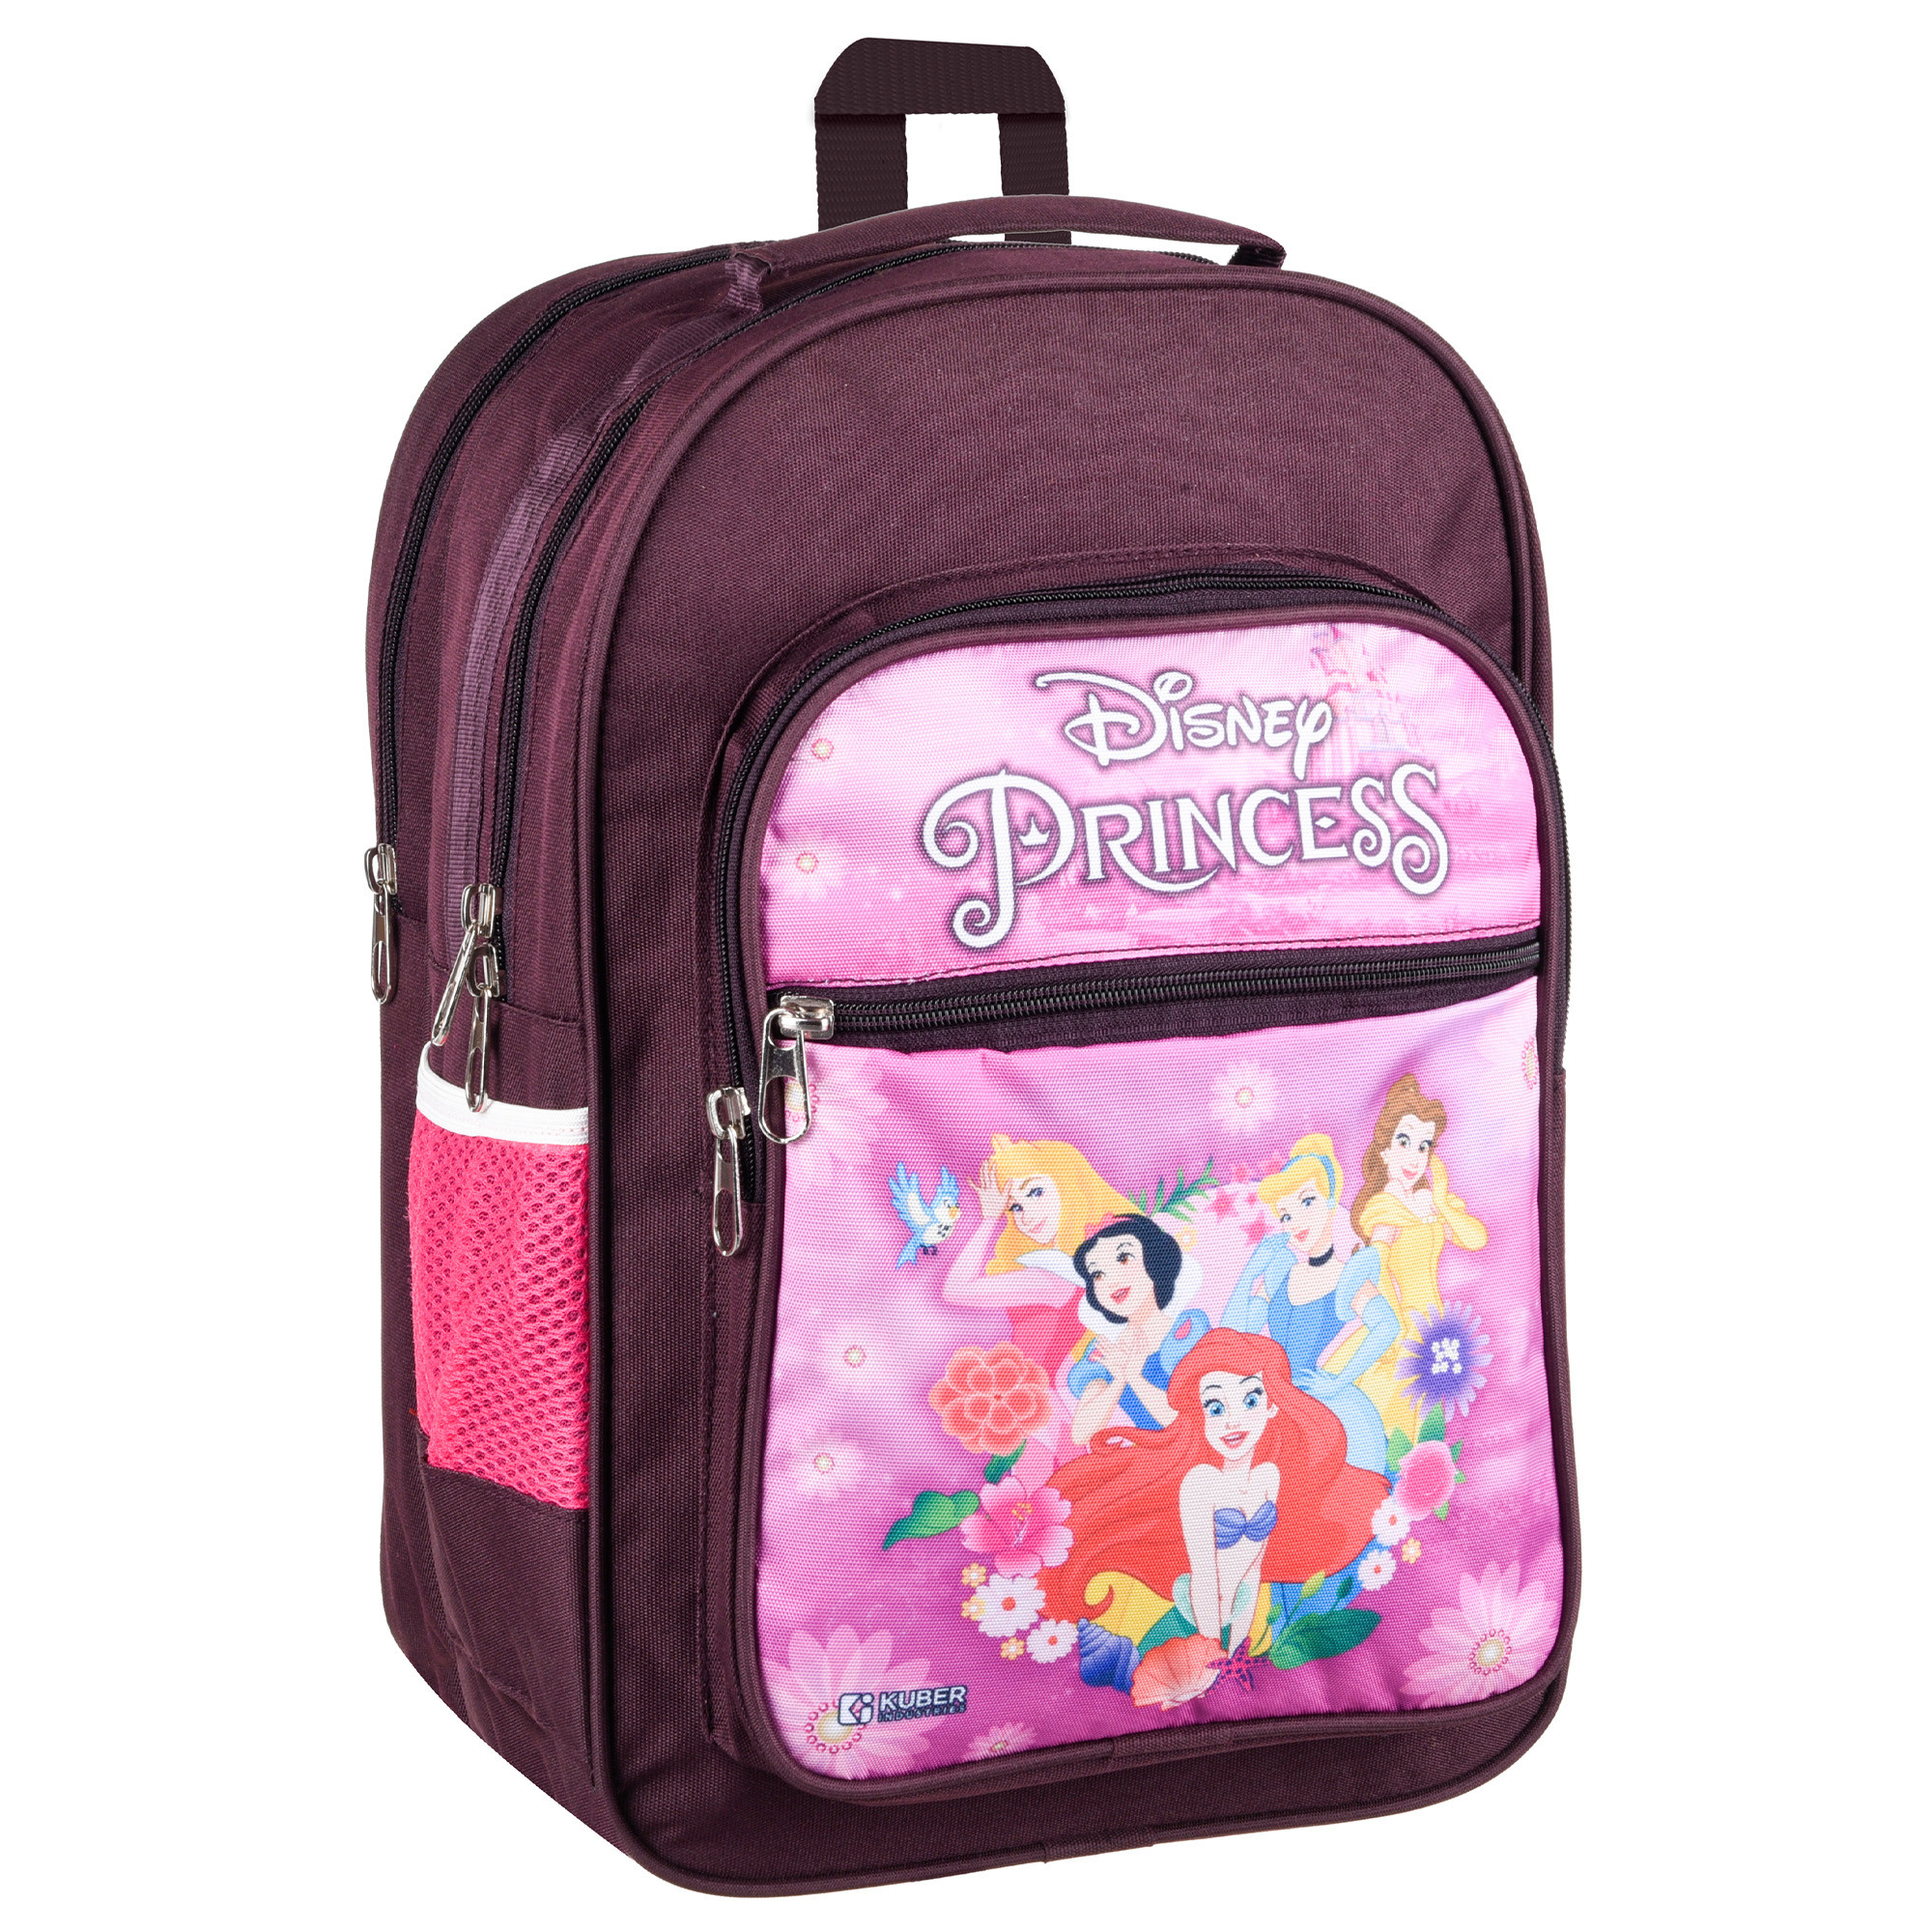 Kuber Industries Disney Princess School Bags | Kids School Bags | Student Bookbag | Travel Backpack | School Bag for Girls & Boys | School Bag with 4 Compartments | Wine